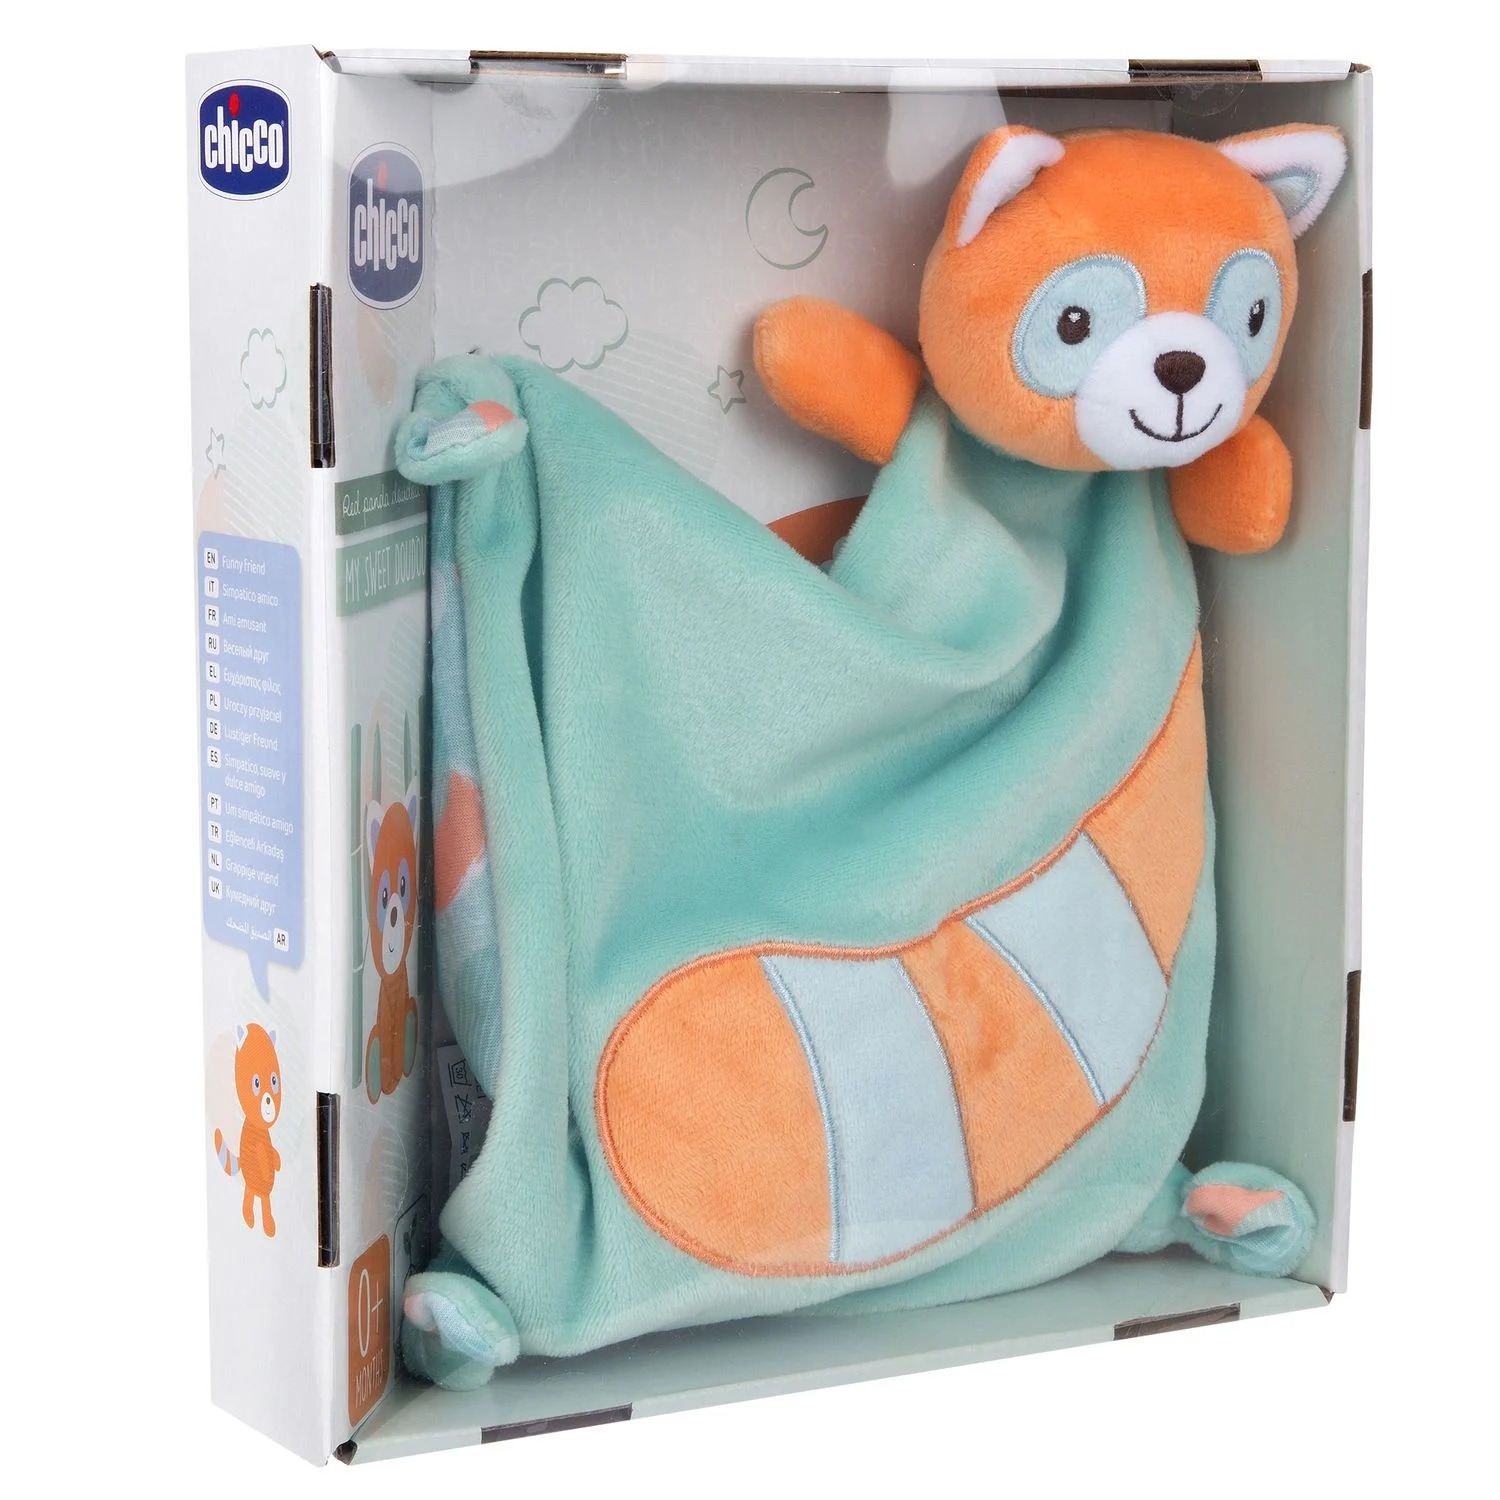 Мягкая игрушка-комфортер для сна Chicco Красная панда (11044.00) - фото 2